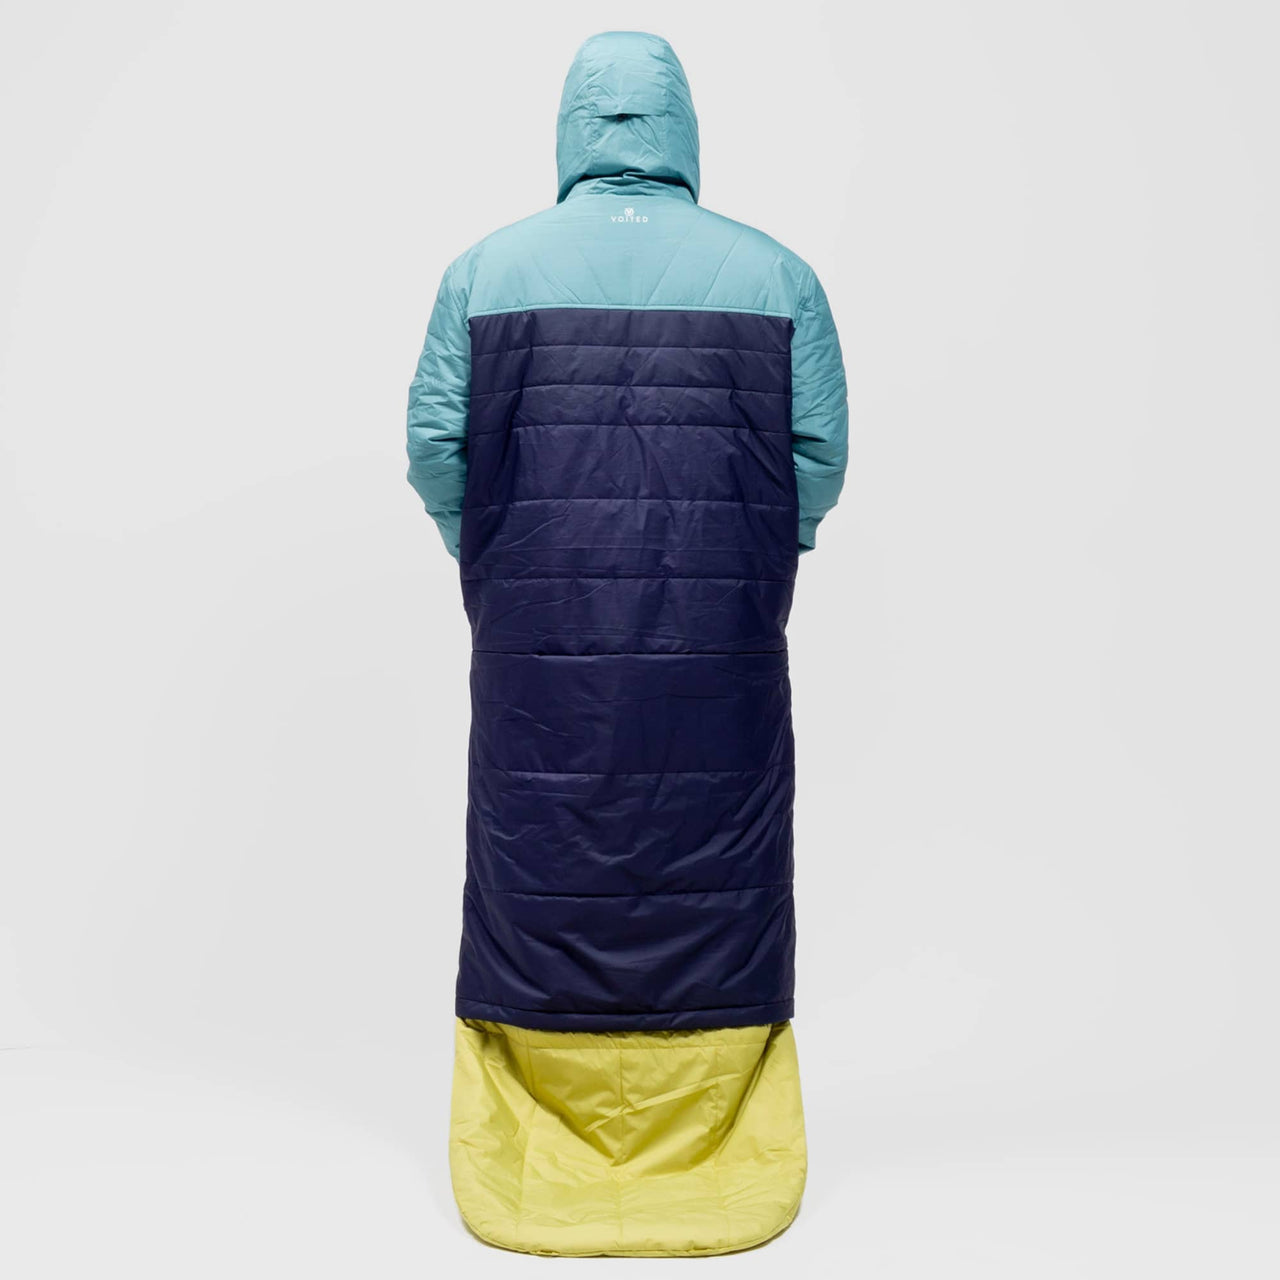 Voited Premium Slumber Jacket for Camping, Vanlife & Indoor - Cardinal / Navy / Black - Large